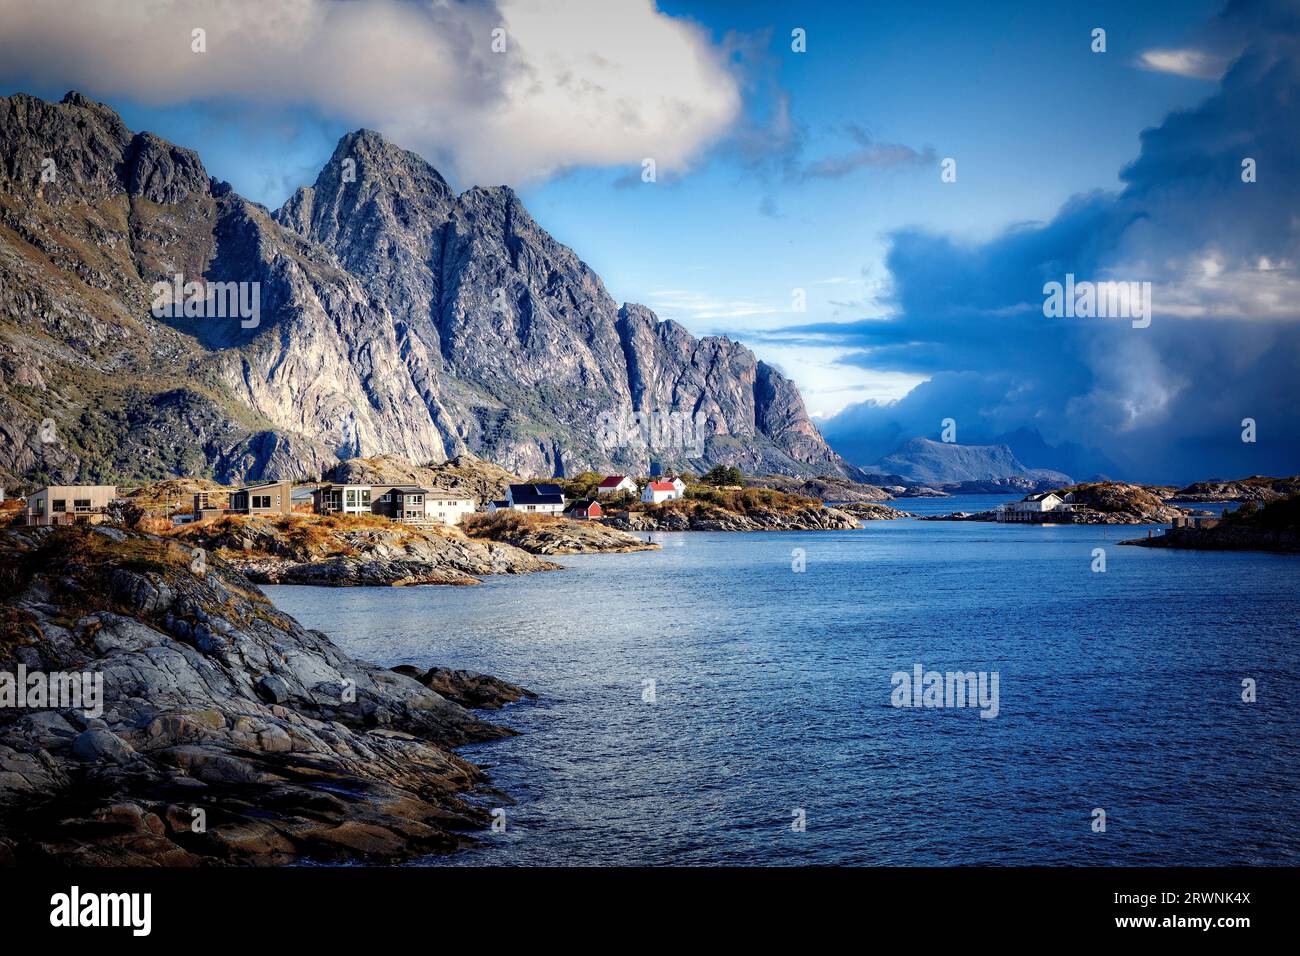 Houses of Henningsvaer set on the low coastal rock on the island of Heimoya, Lofoten Islands, Norway. Stock Photo